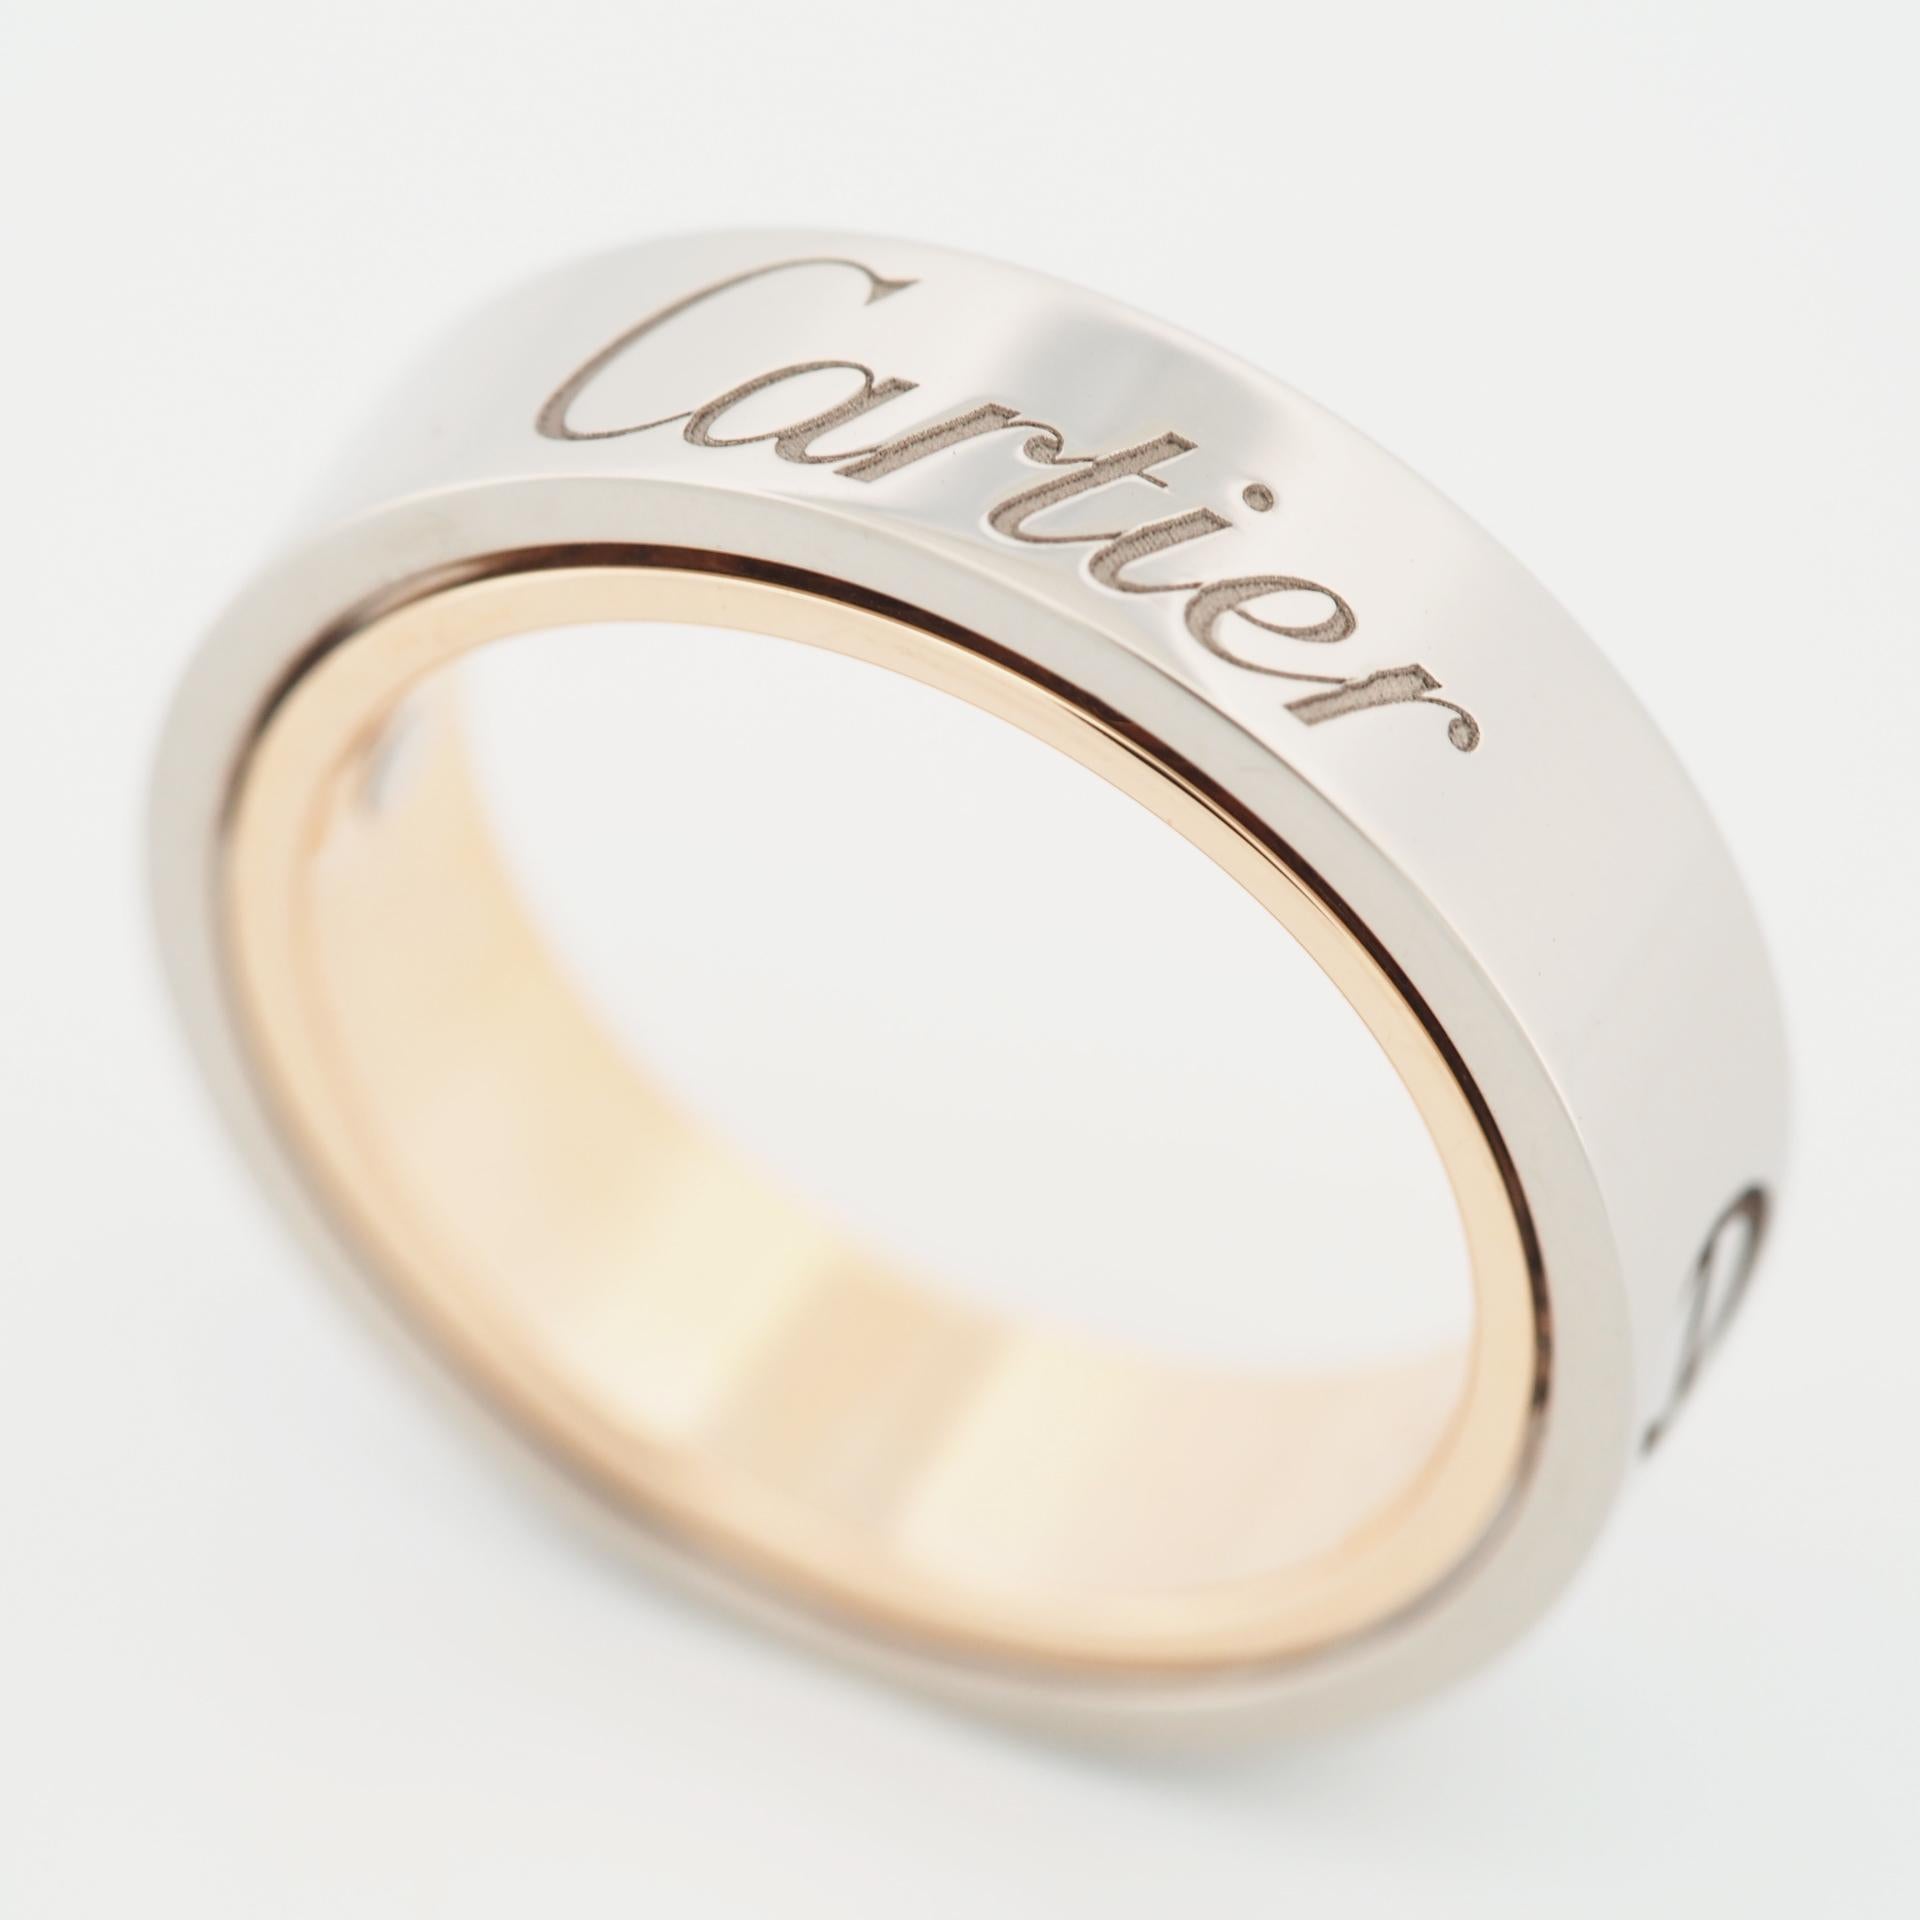 cartier love ring inside engraving